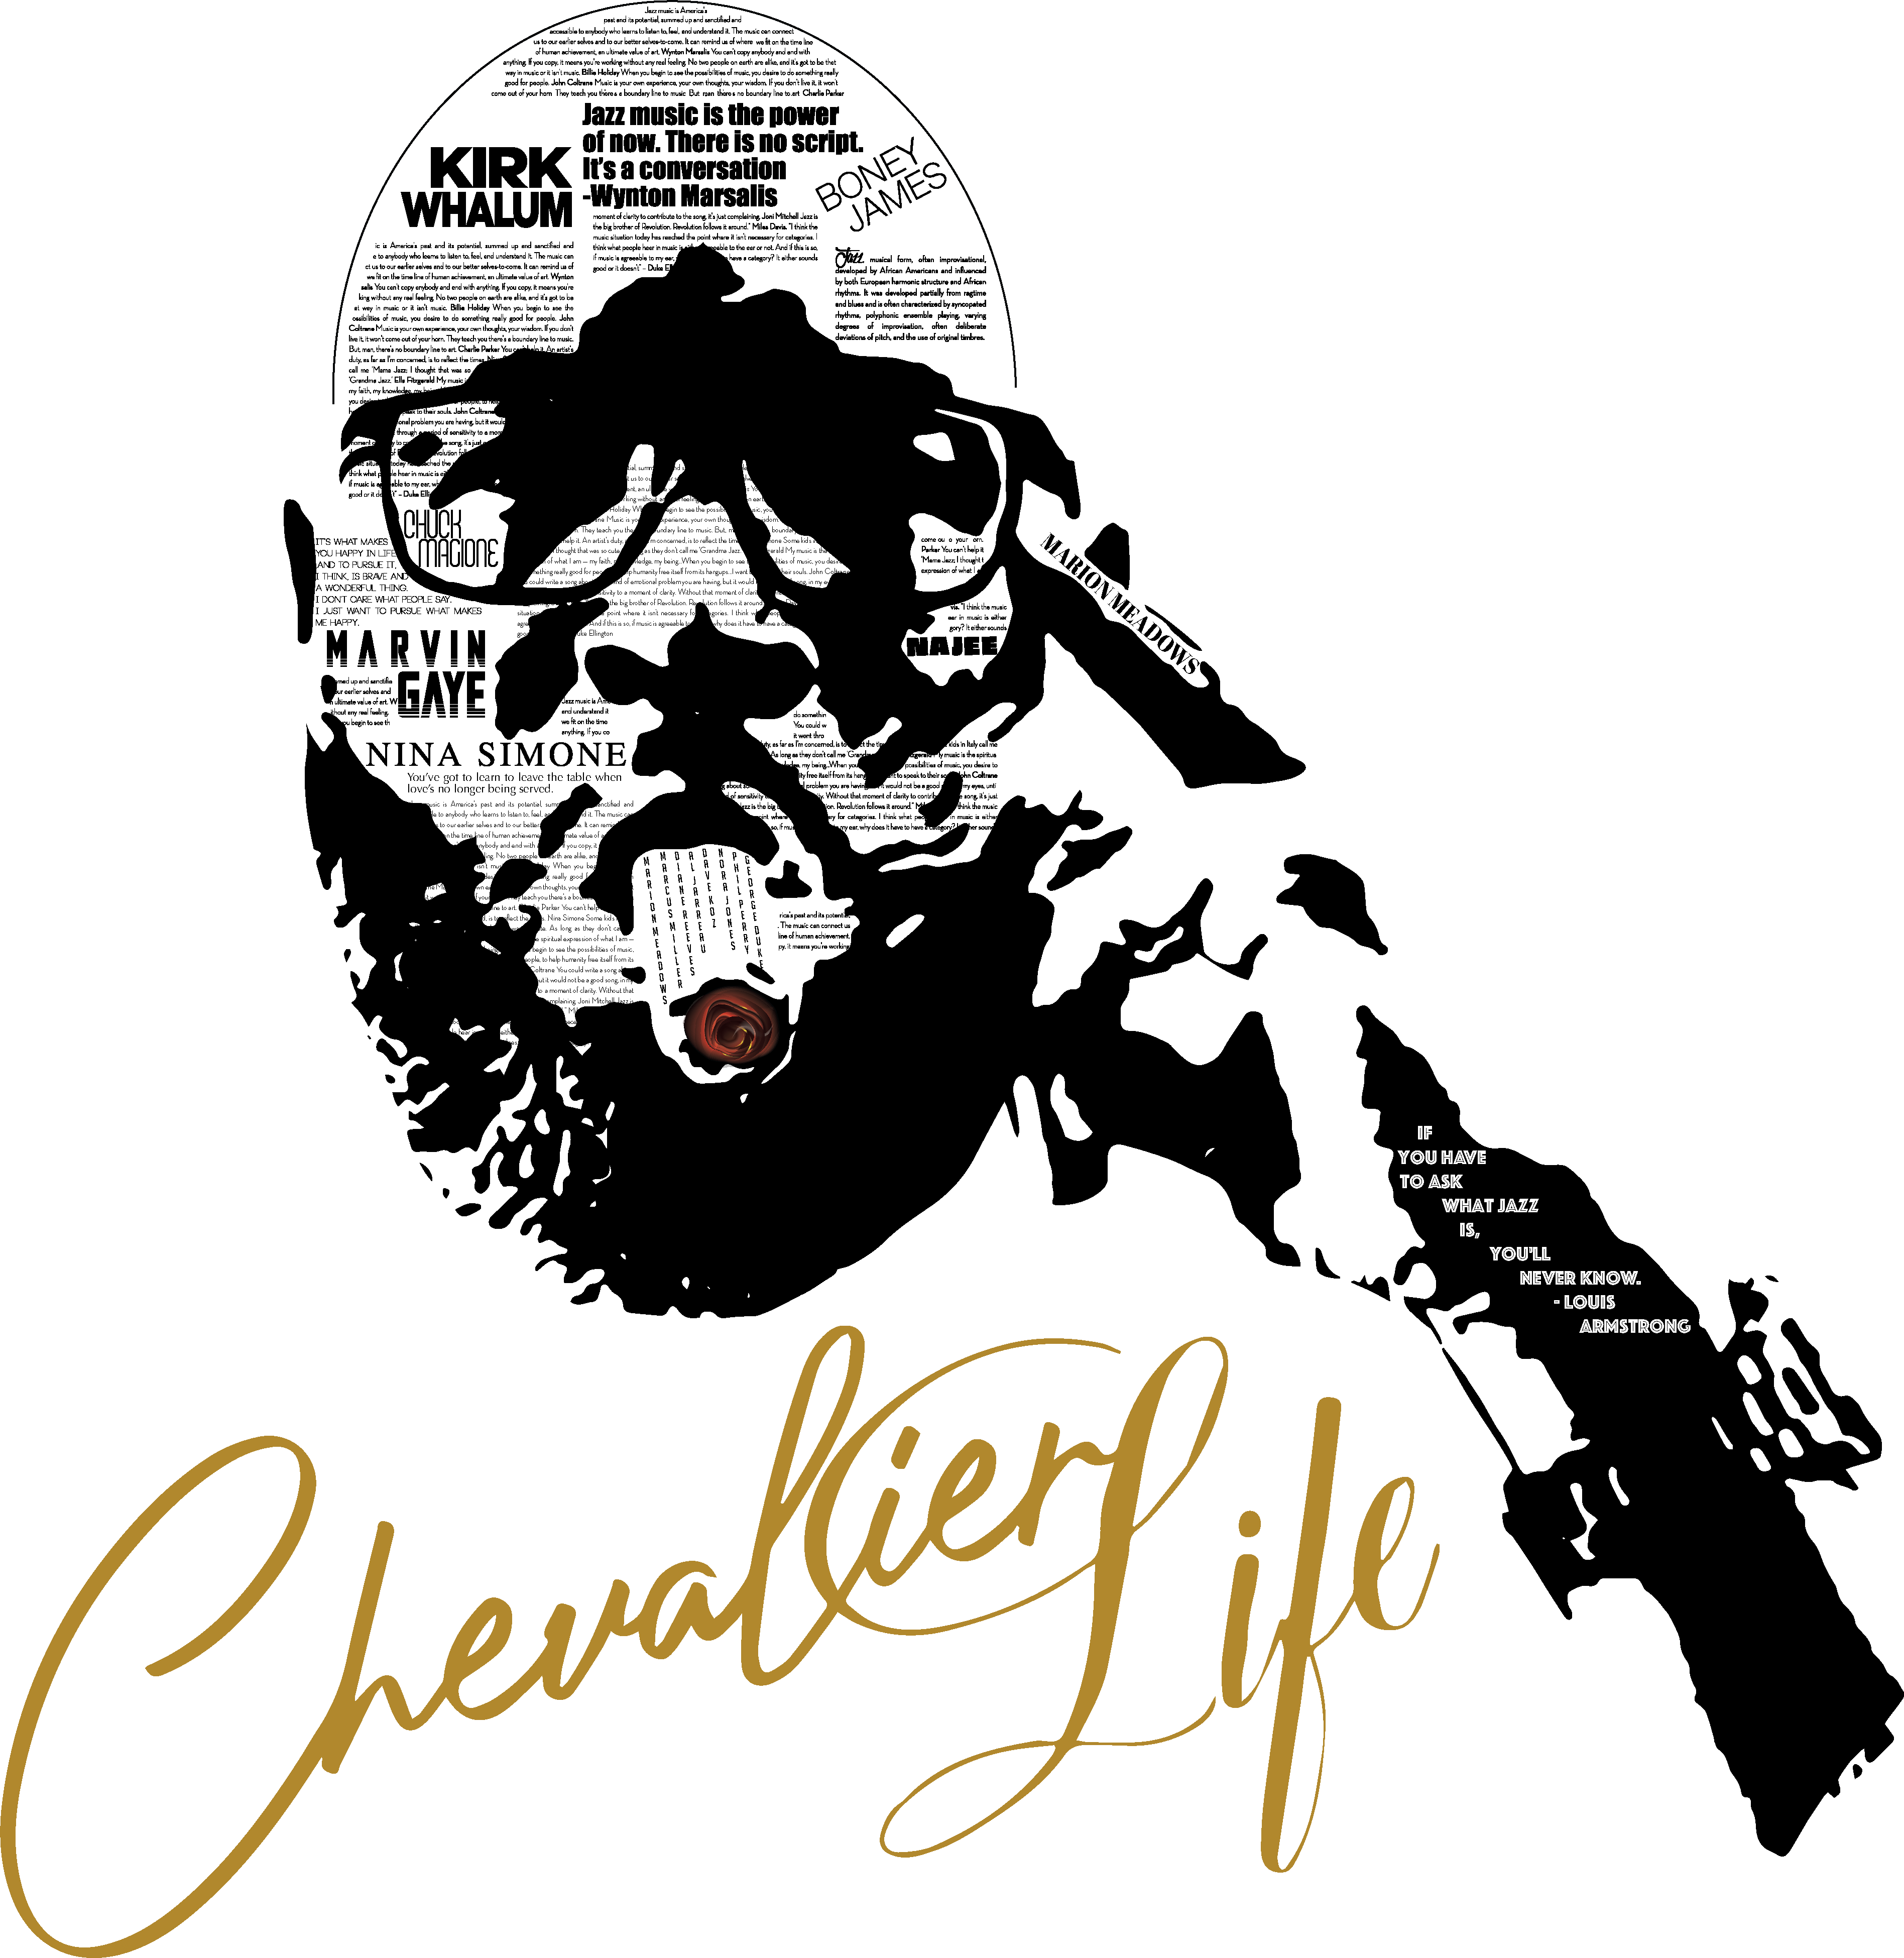 ChevalierLife